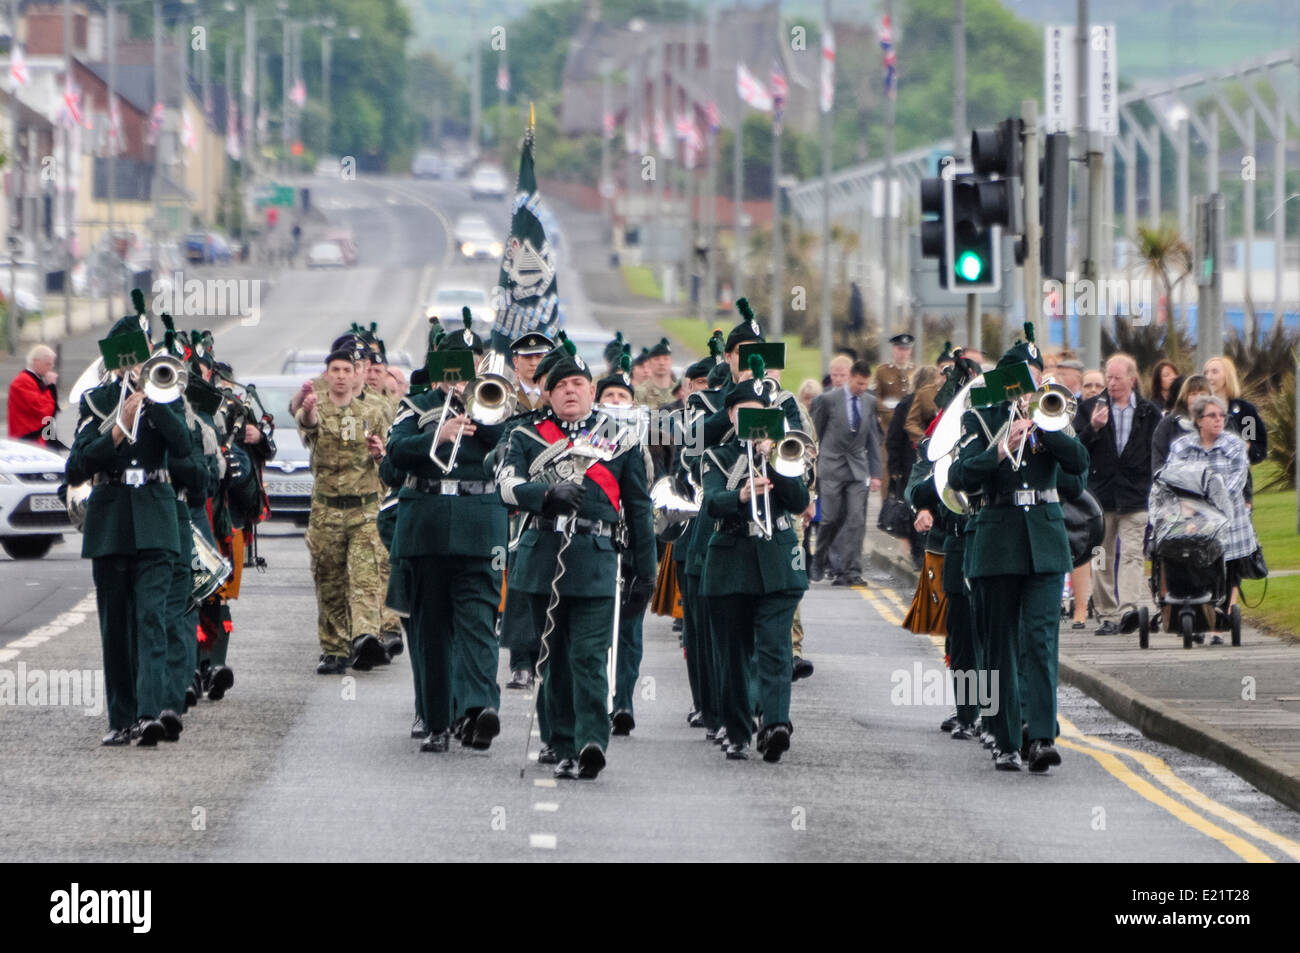 Carrickfergus, Northern Ireland. 25 May 2014 - Band of the Royal Irish Regiment lead a military parade Stock Photo